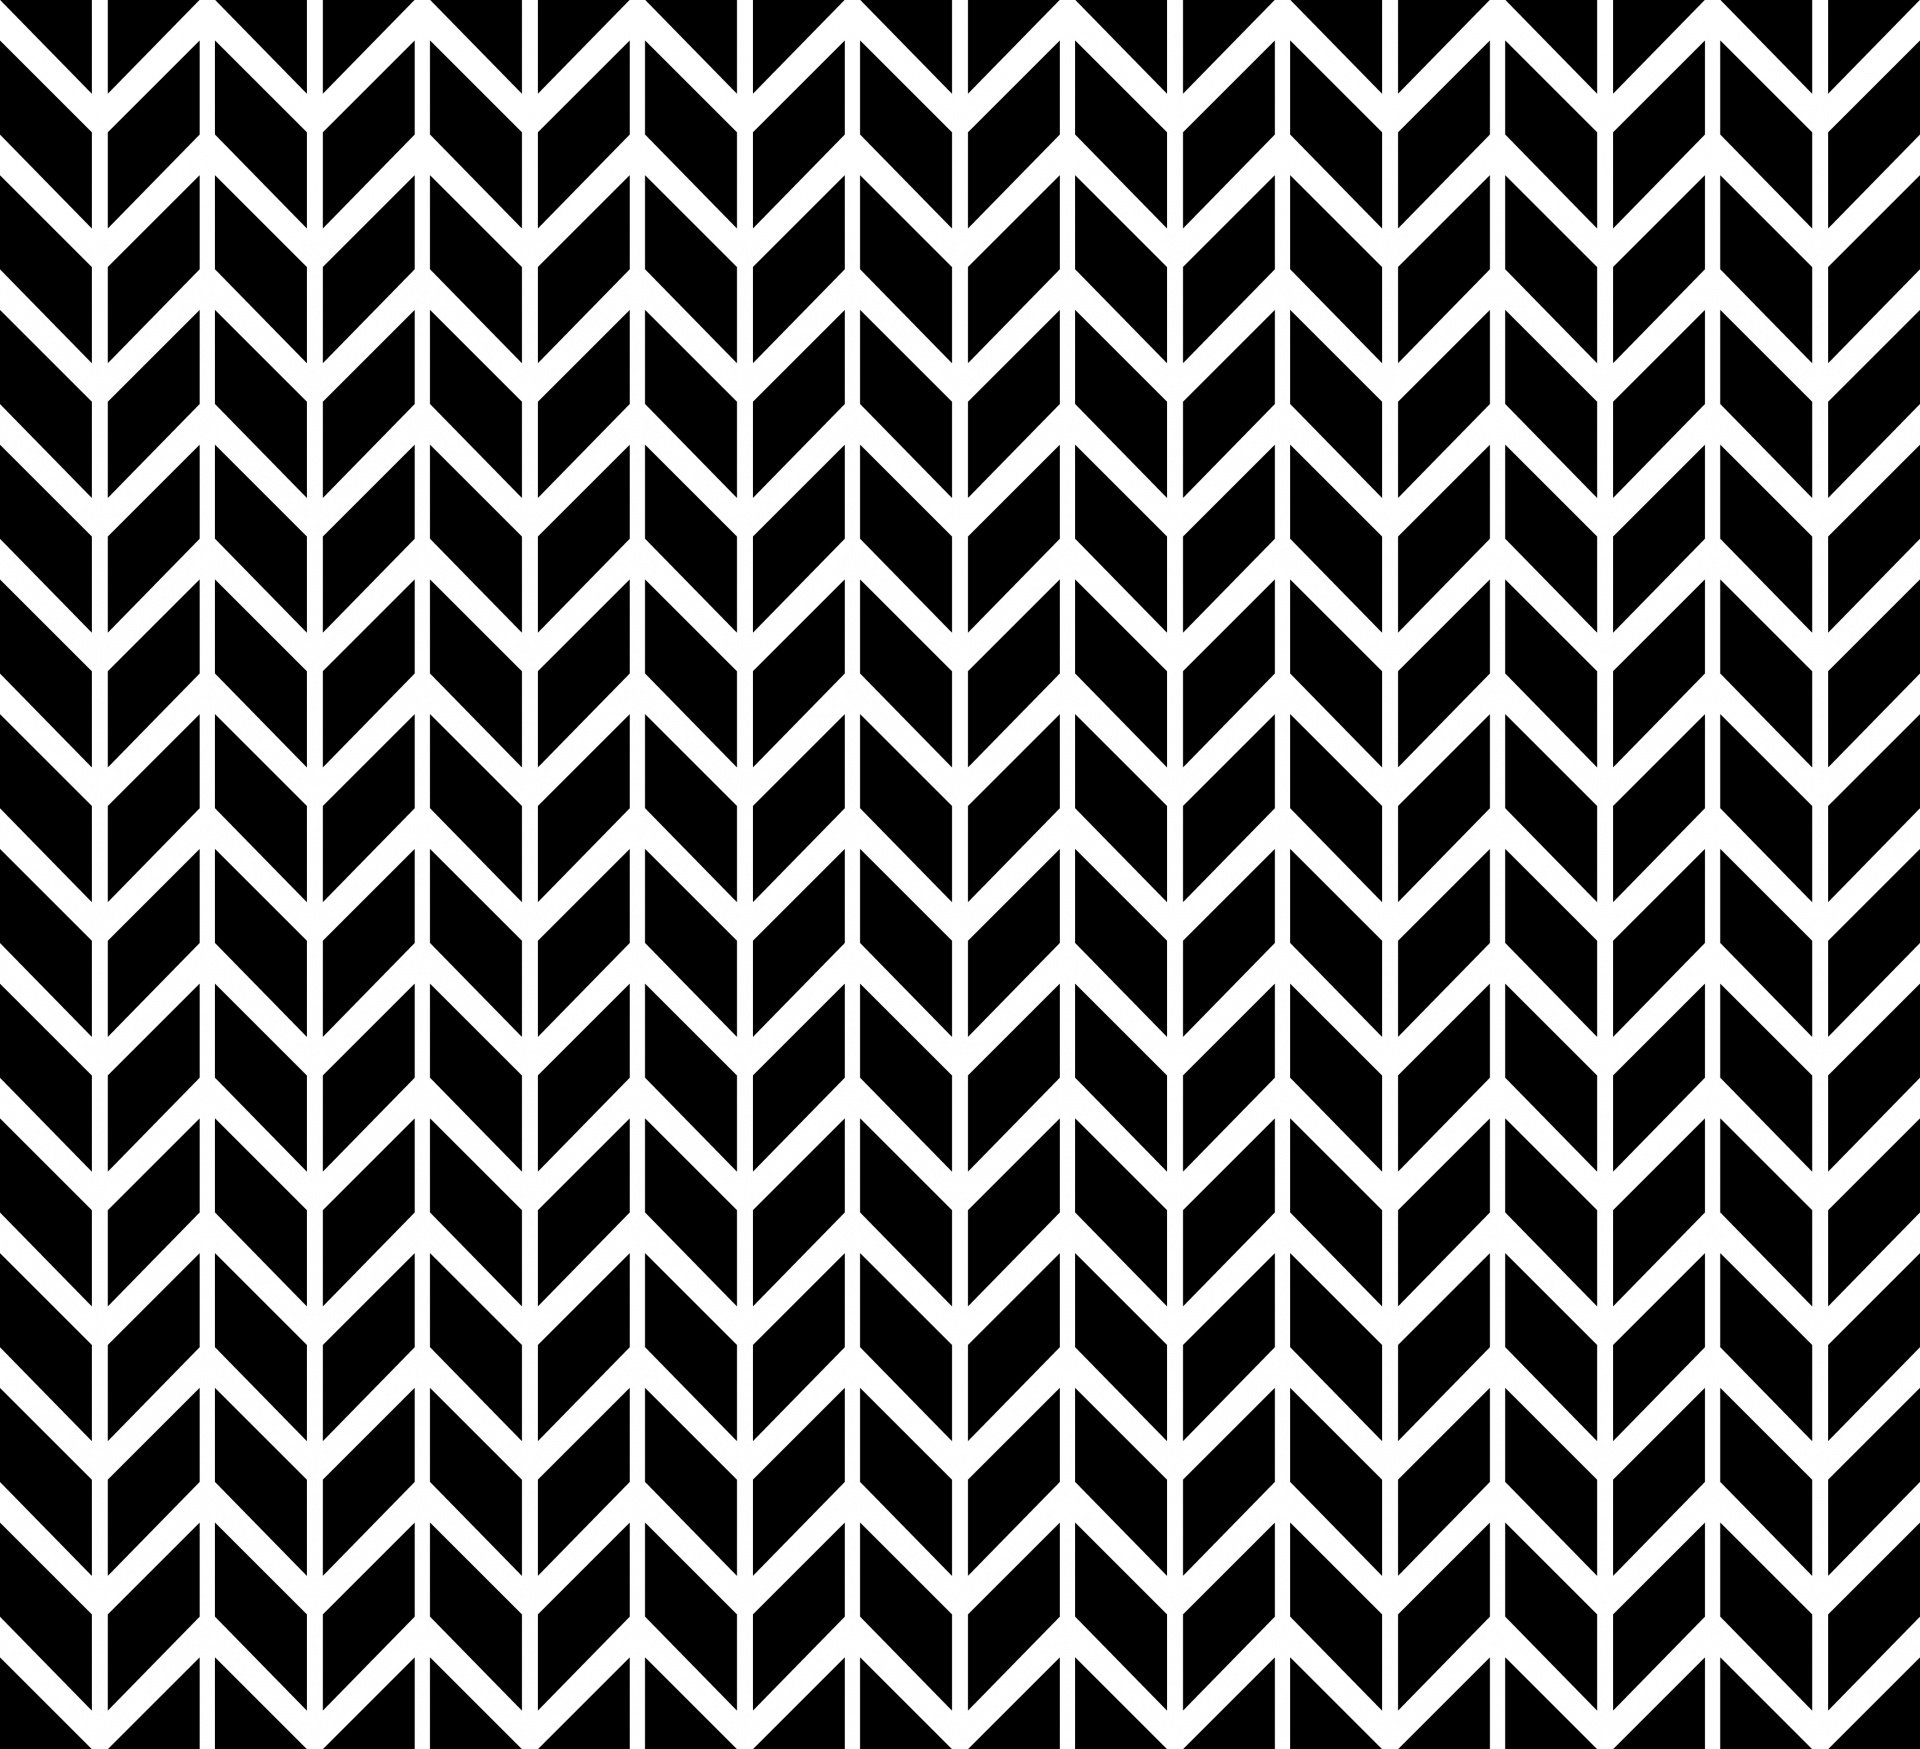 Black and white geometric chevrons pattern modern wallpaper background